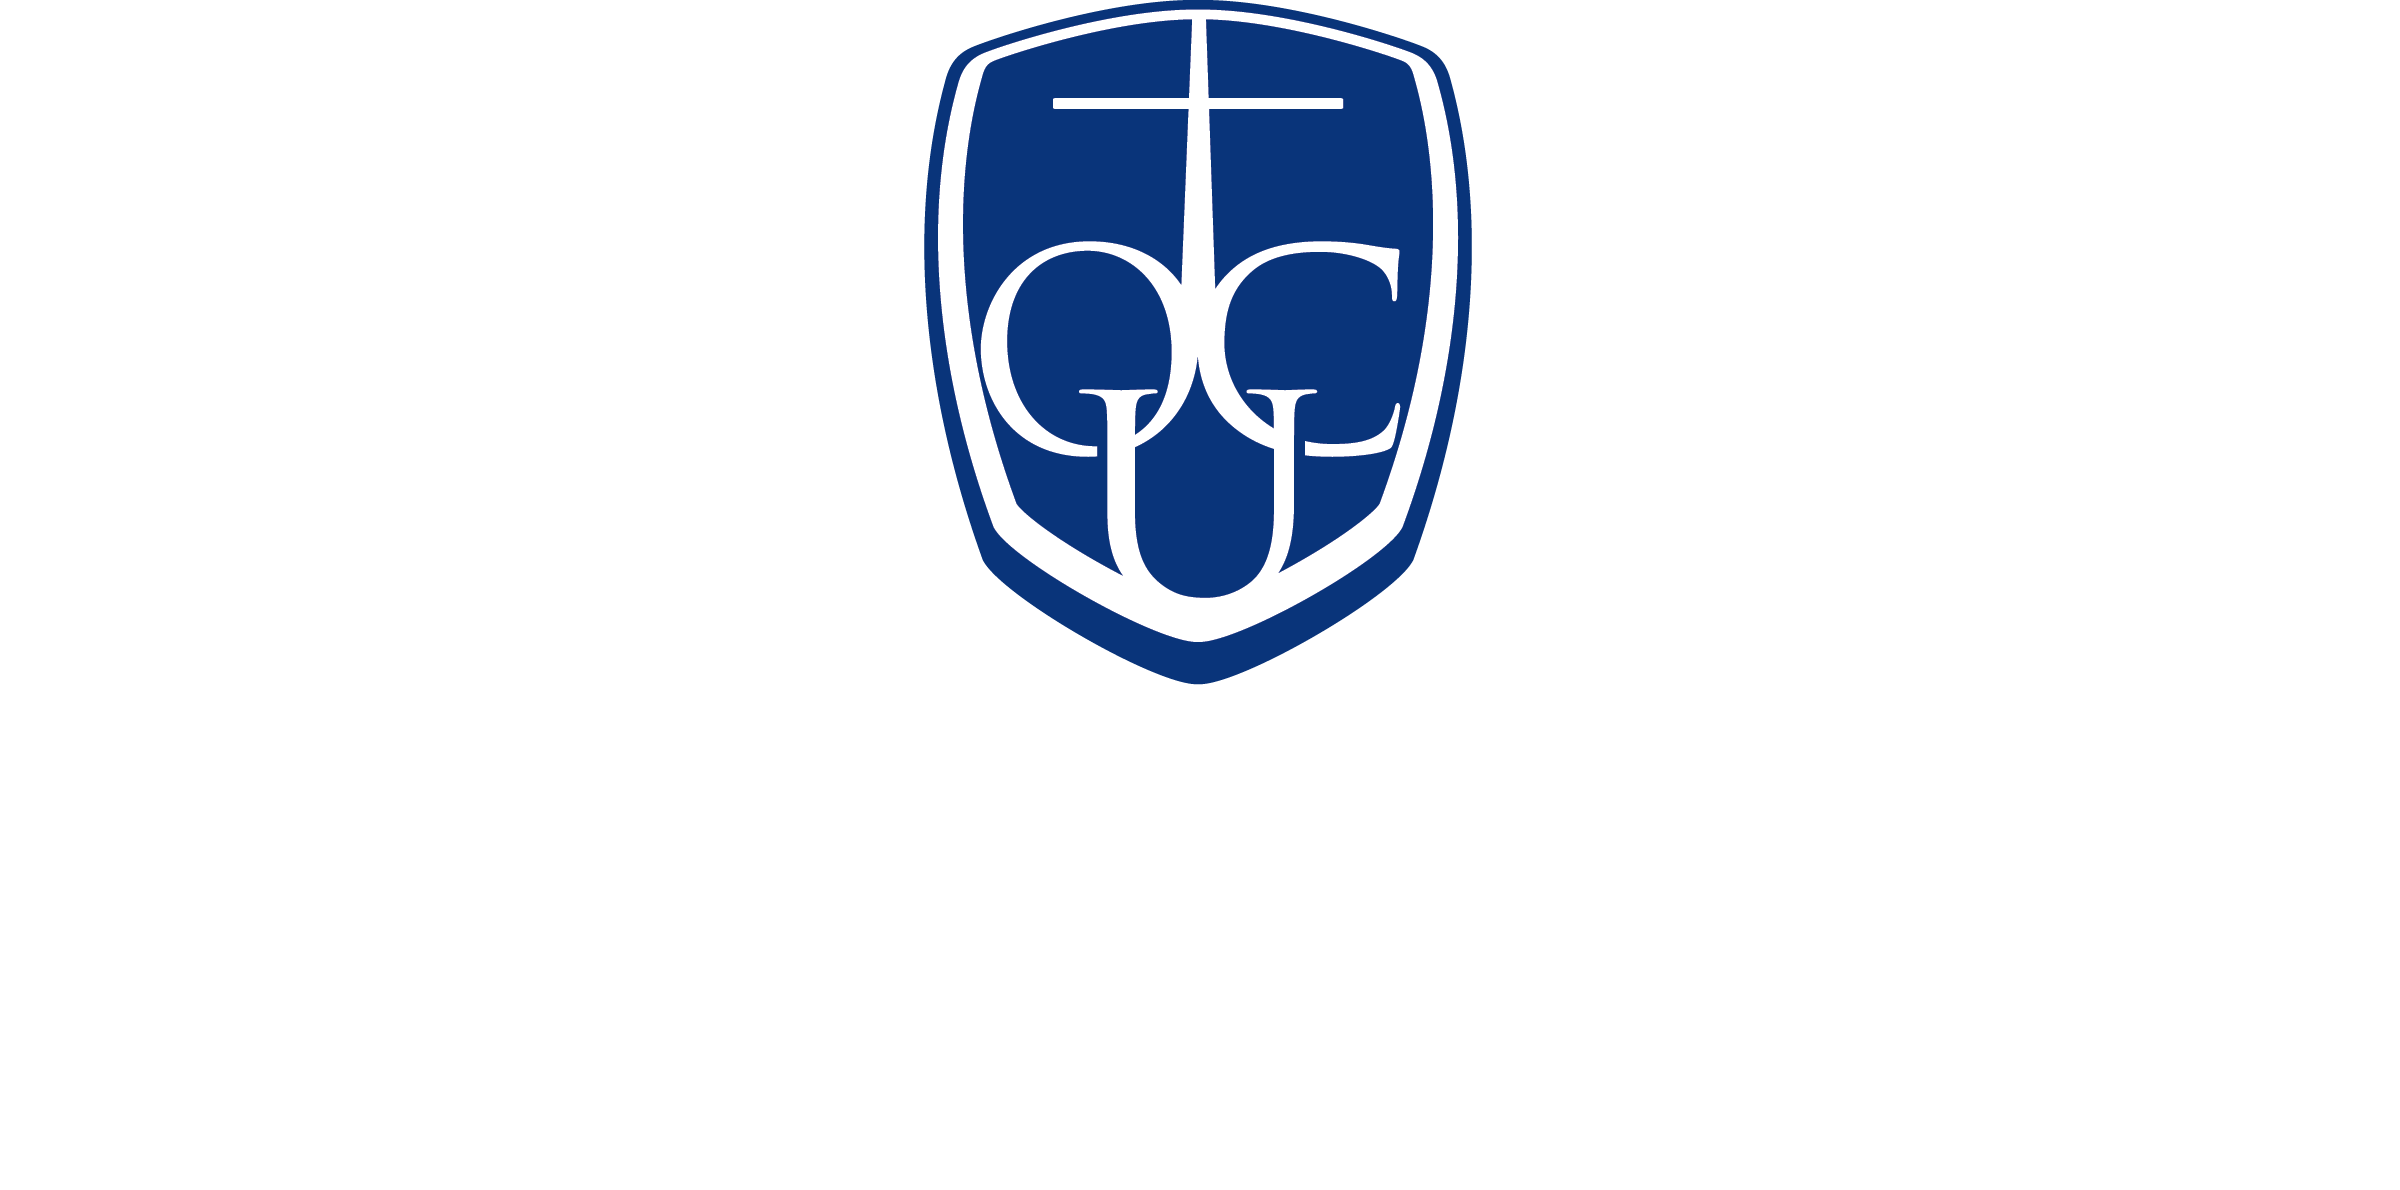 Oakland City University Logo